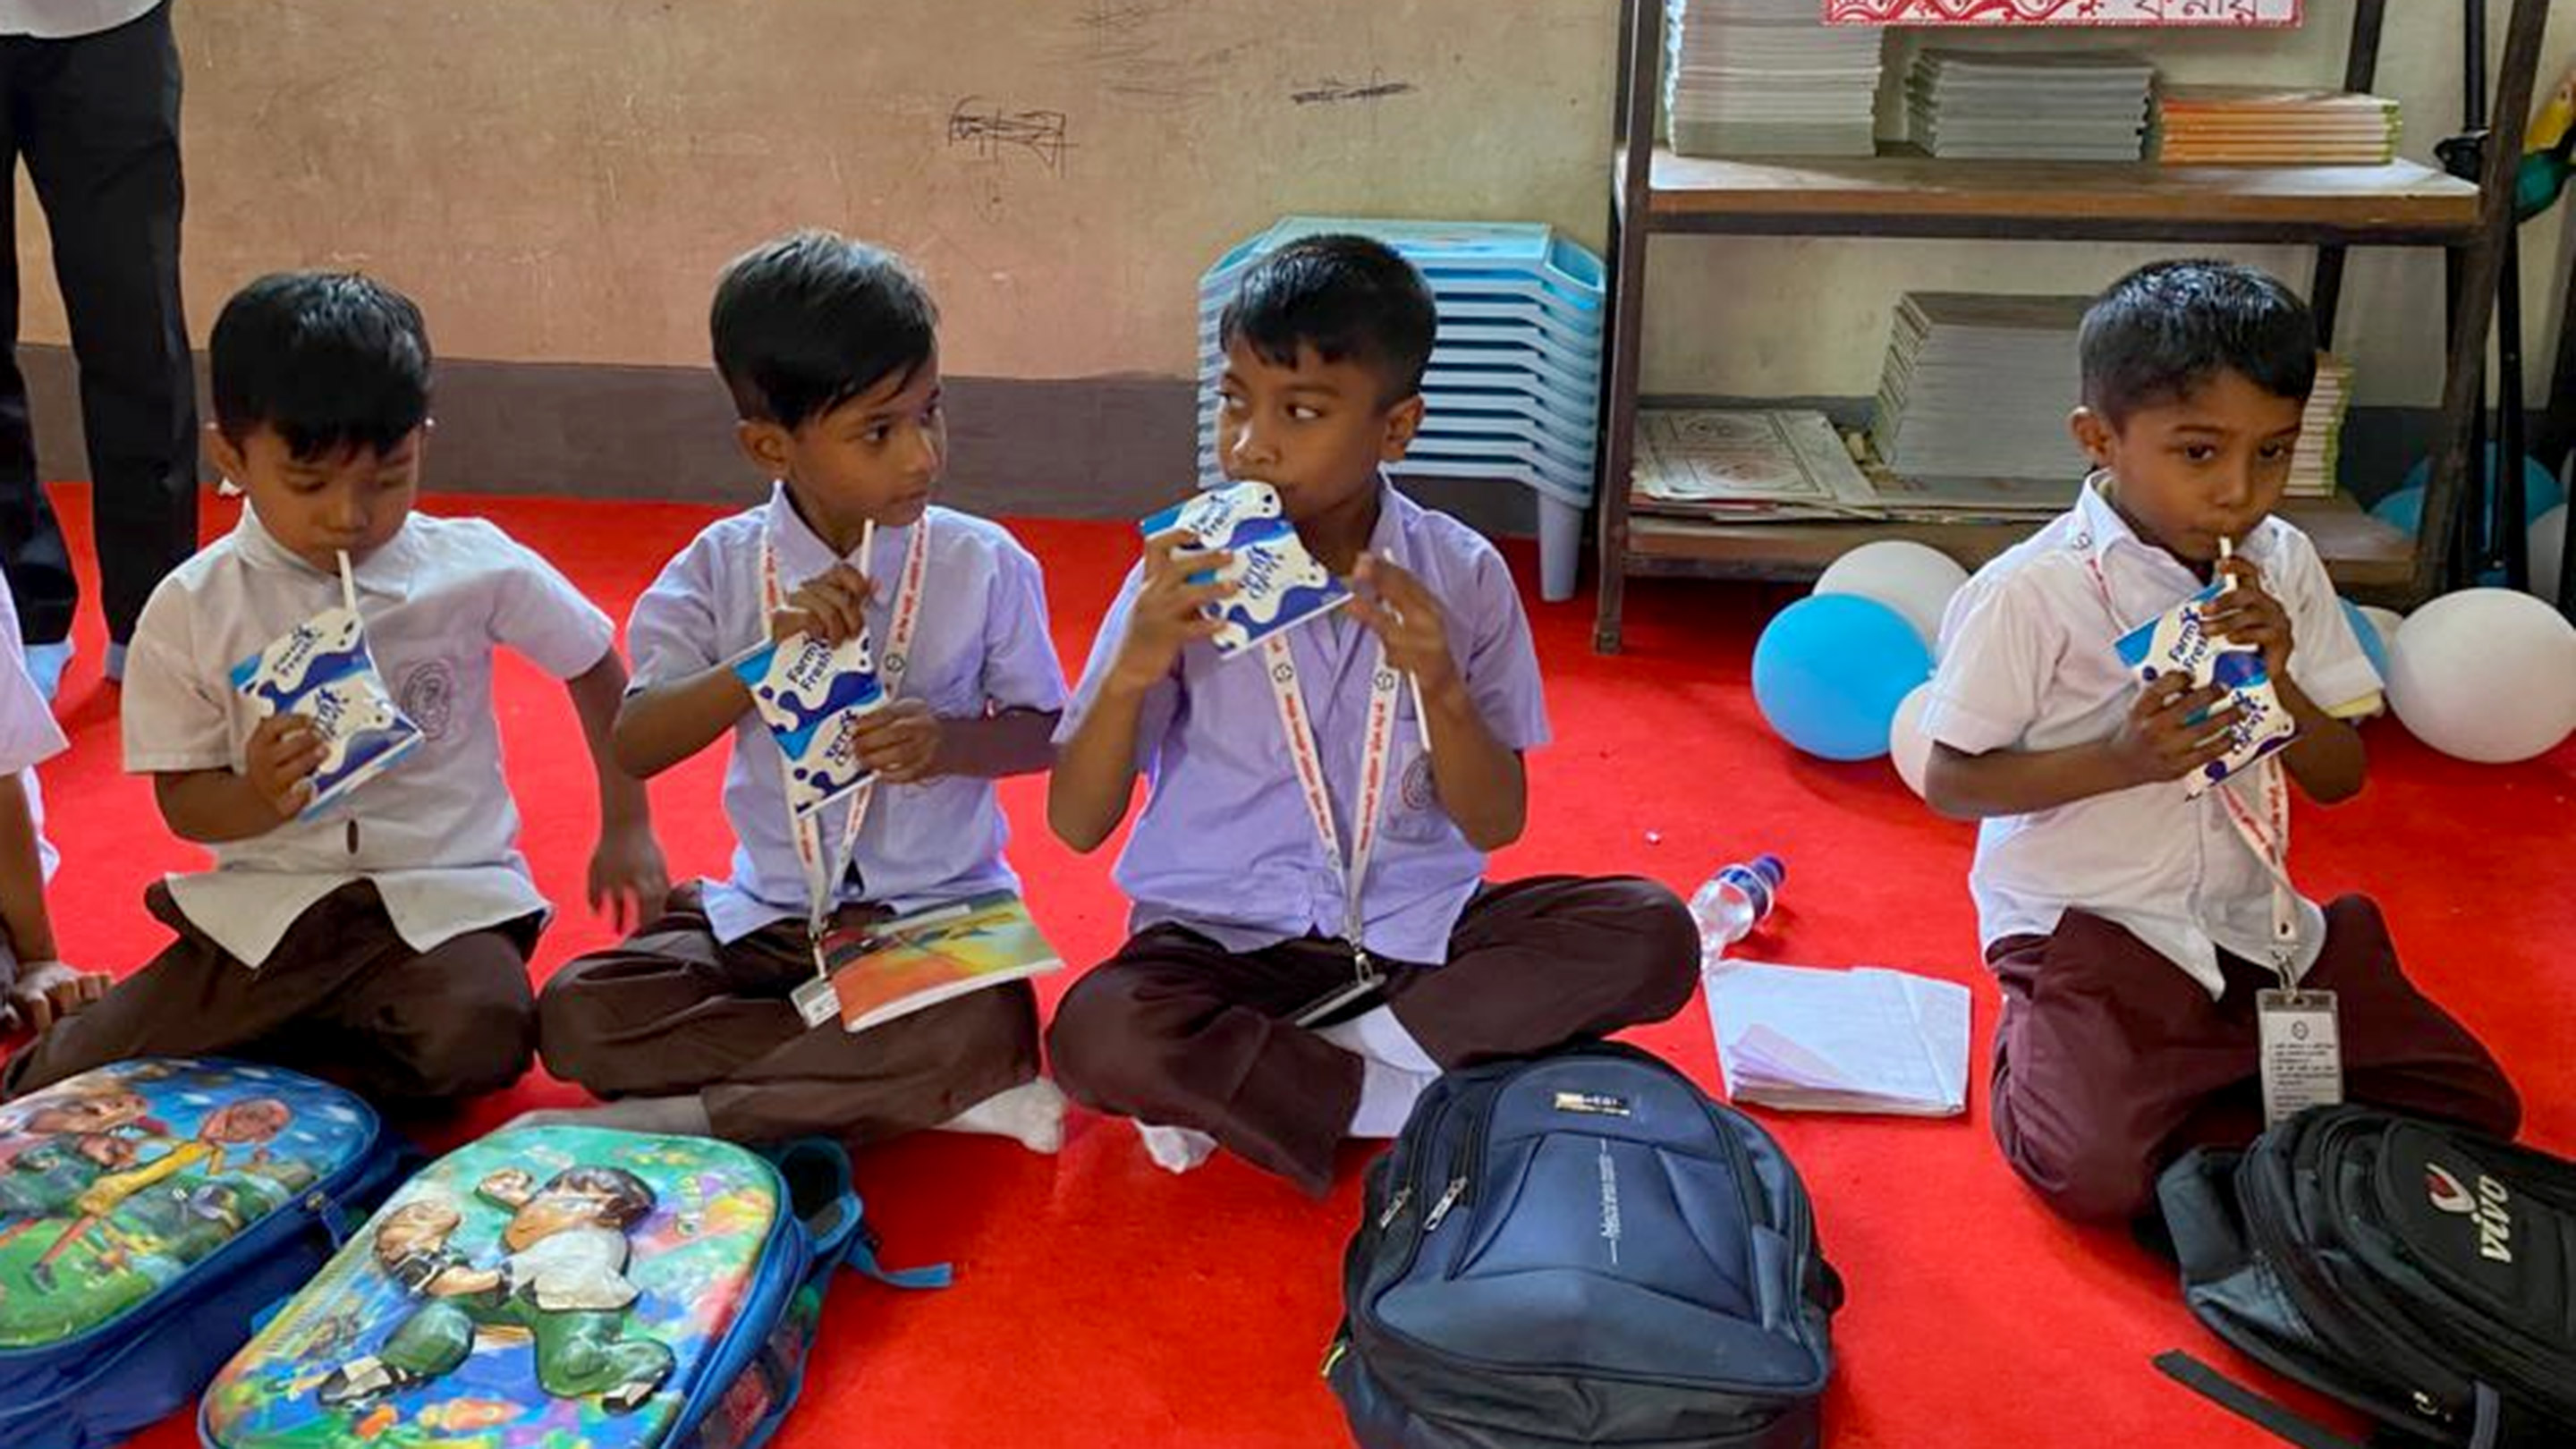 School children in Bangladesh, milk in Tetra Fino Aseptic carton packages